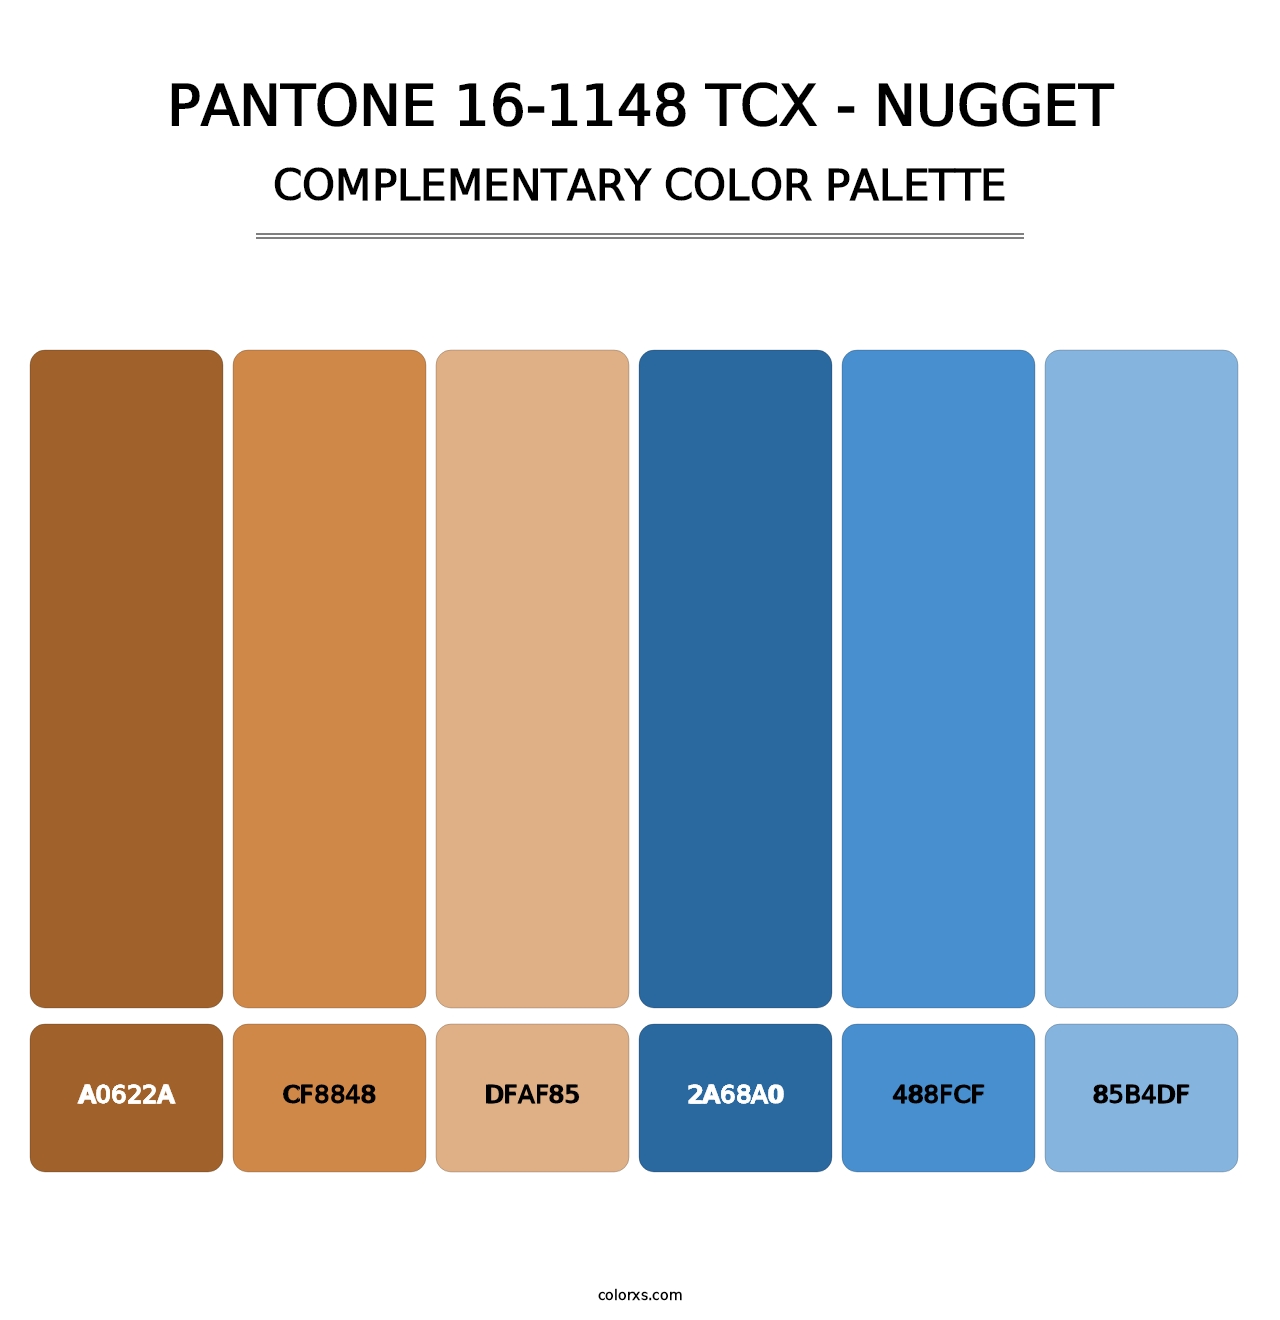 PANTONE 16-1148 TCX - Nugget - Complementary Color Palette